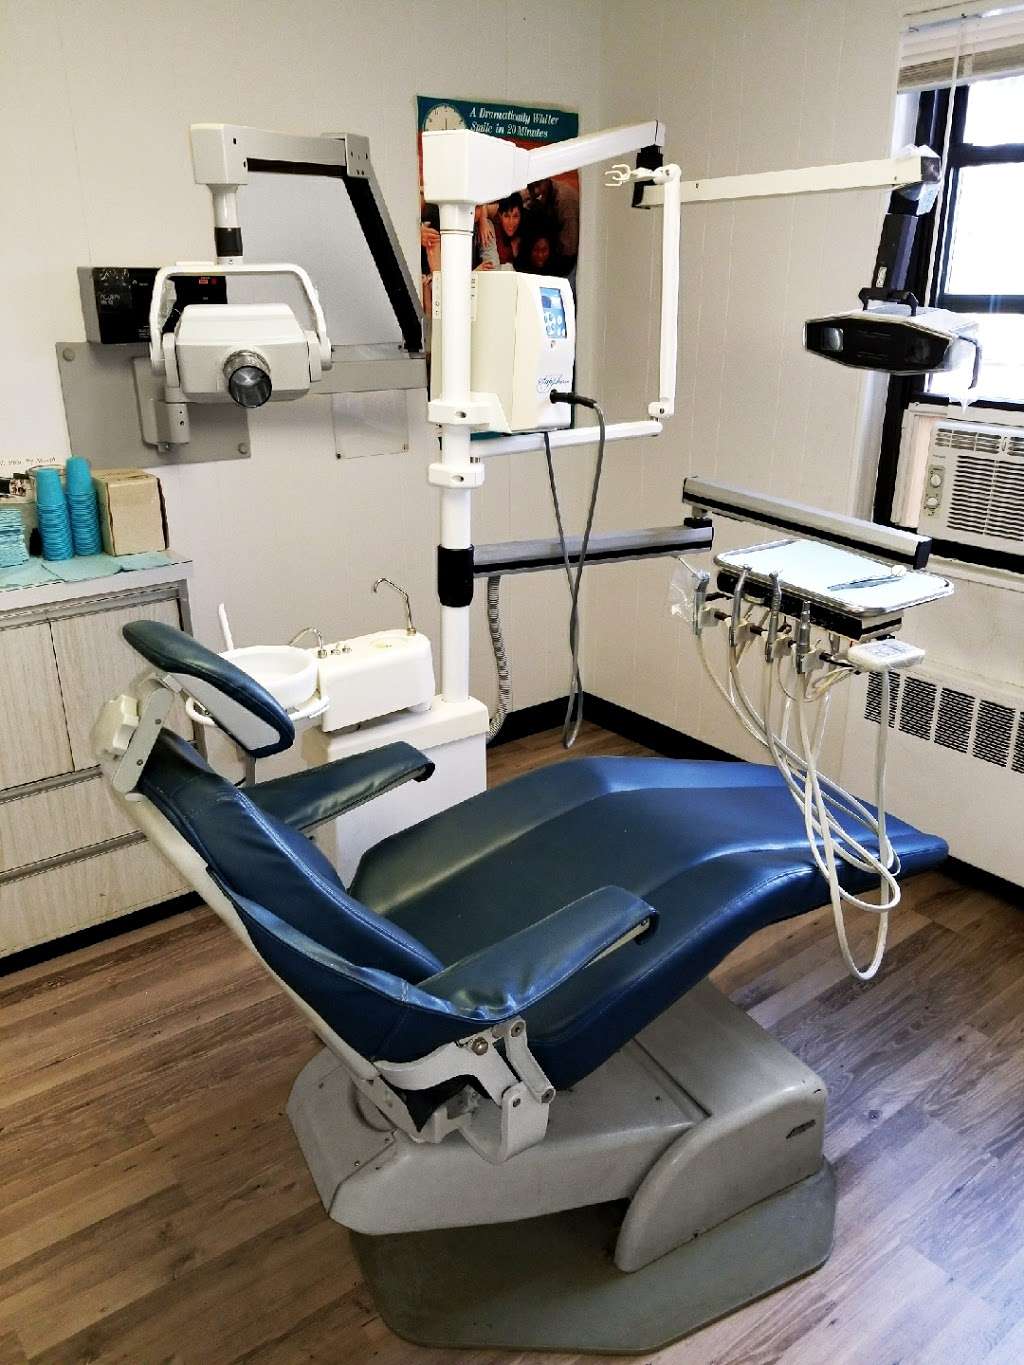 Bayside Dental Office: Family & Cosmetic Dentistry | 217-10 73rd Ave, Bayside, NY 11364 | Phone: (718) 464-7556